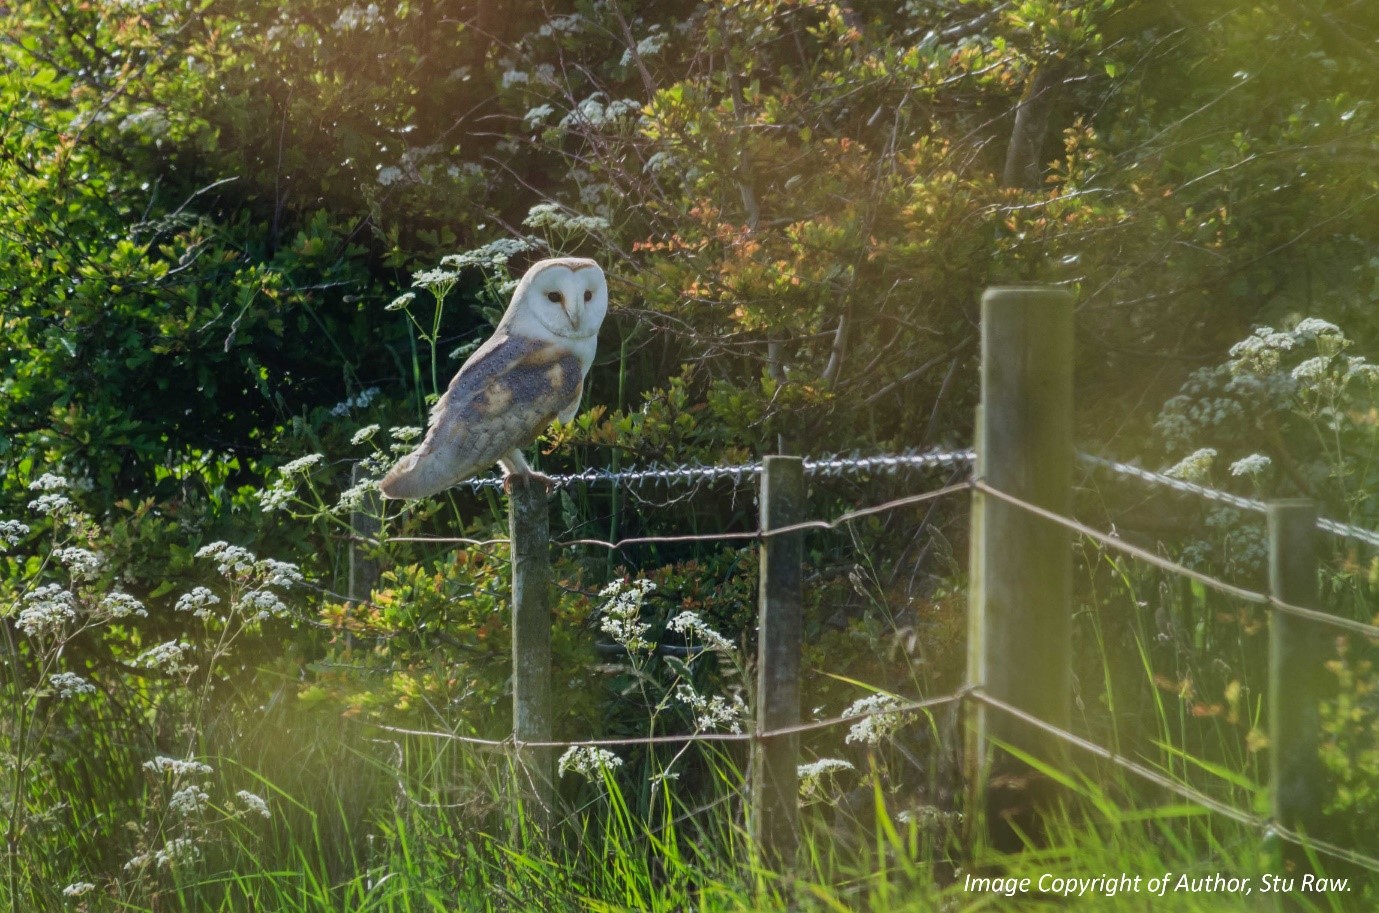 Photograph of a barn owl on a fence post.